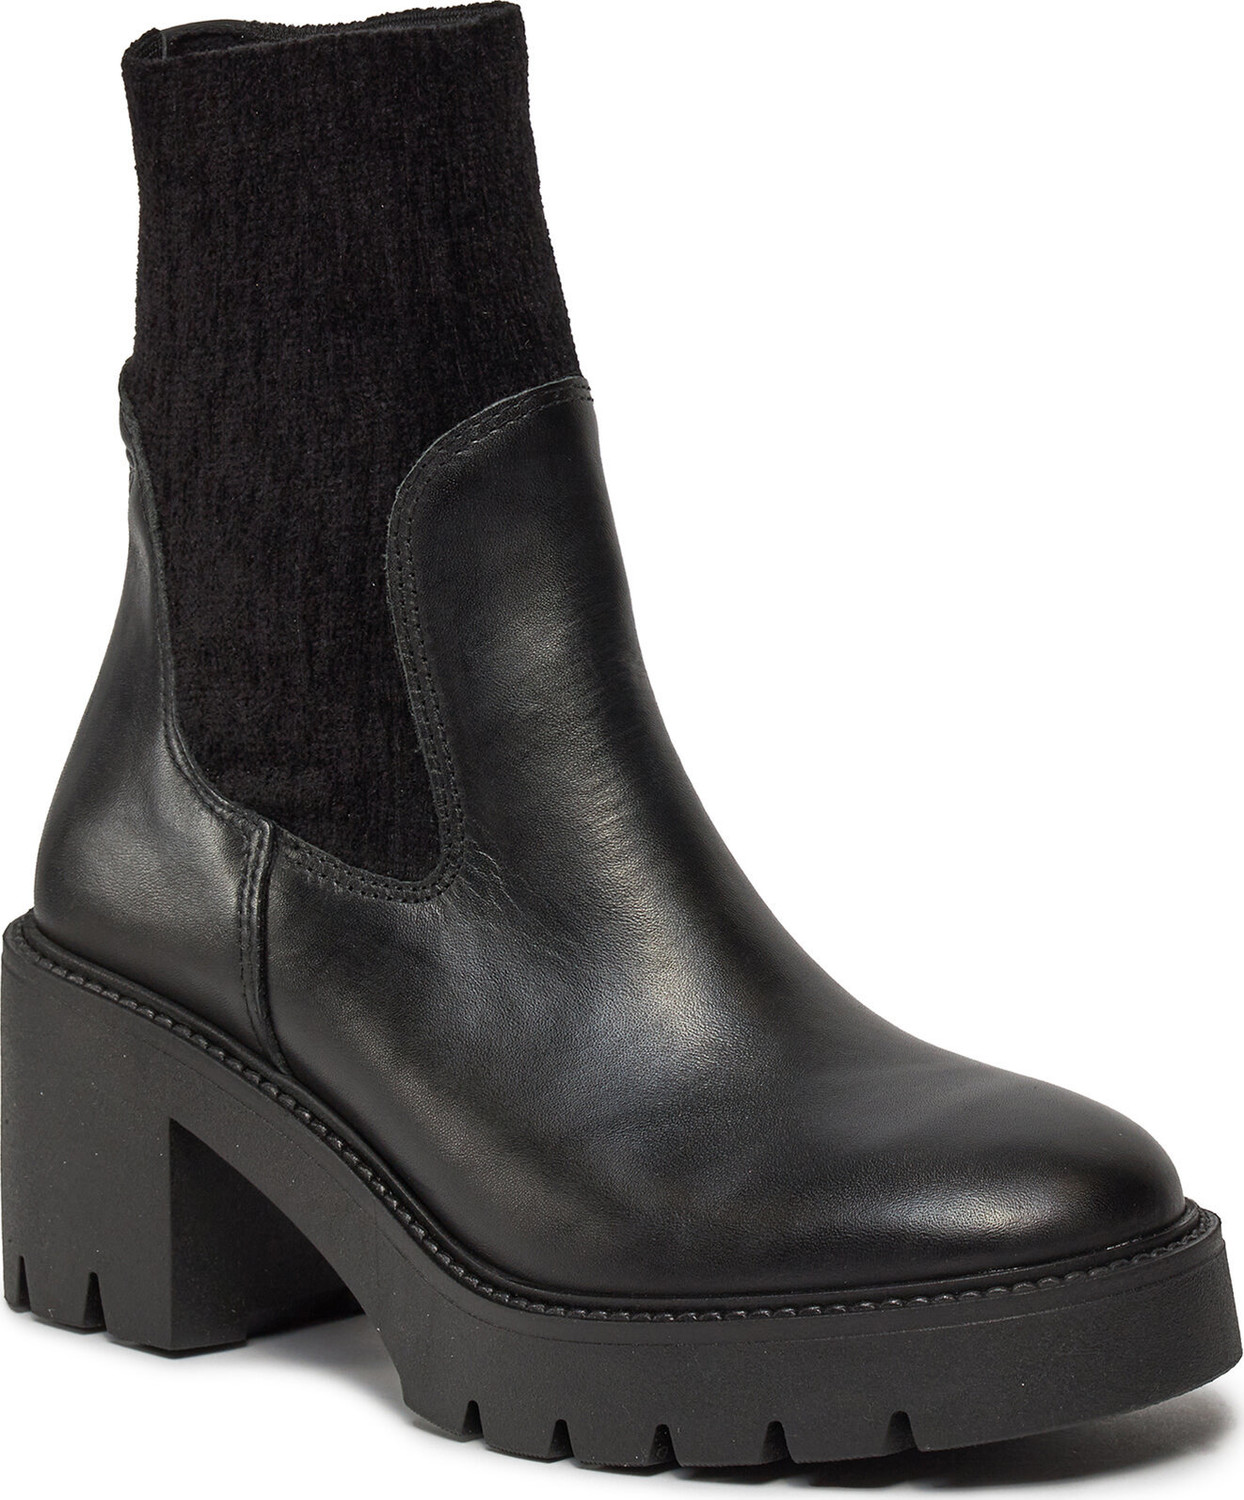 Kotníková obuv s elastickým prvkem Tamaris 1-25851-41 Black Leather 003